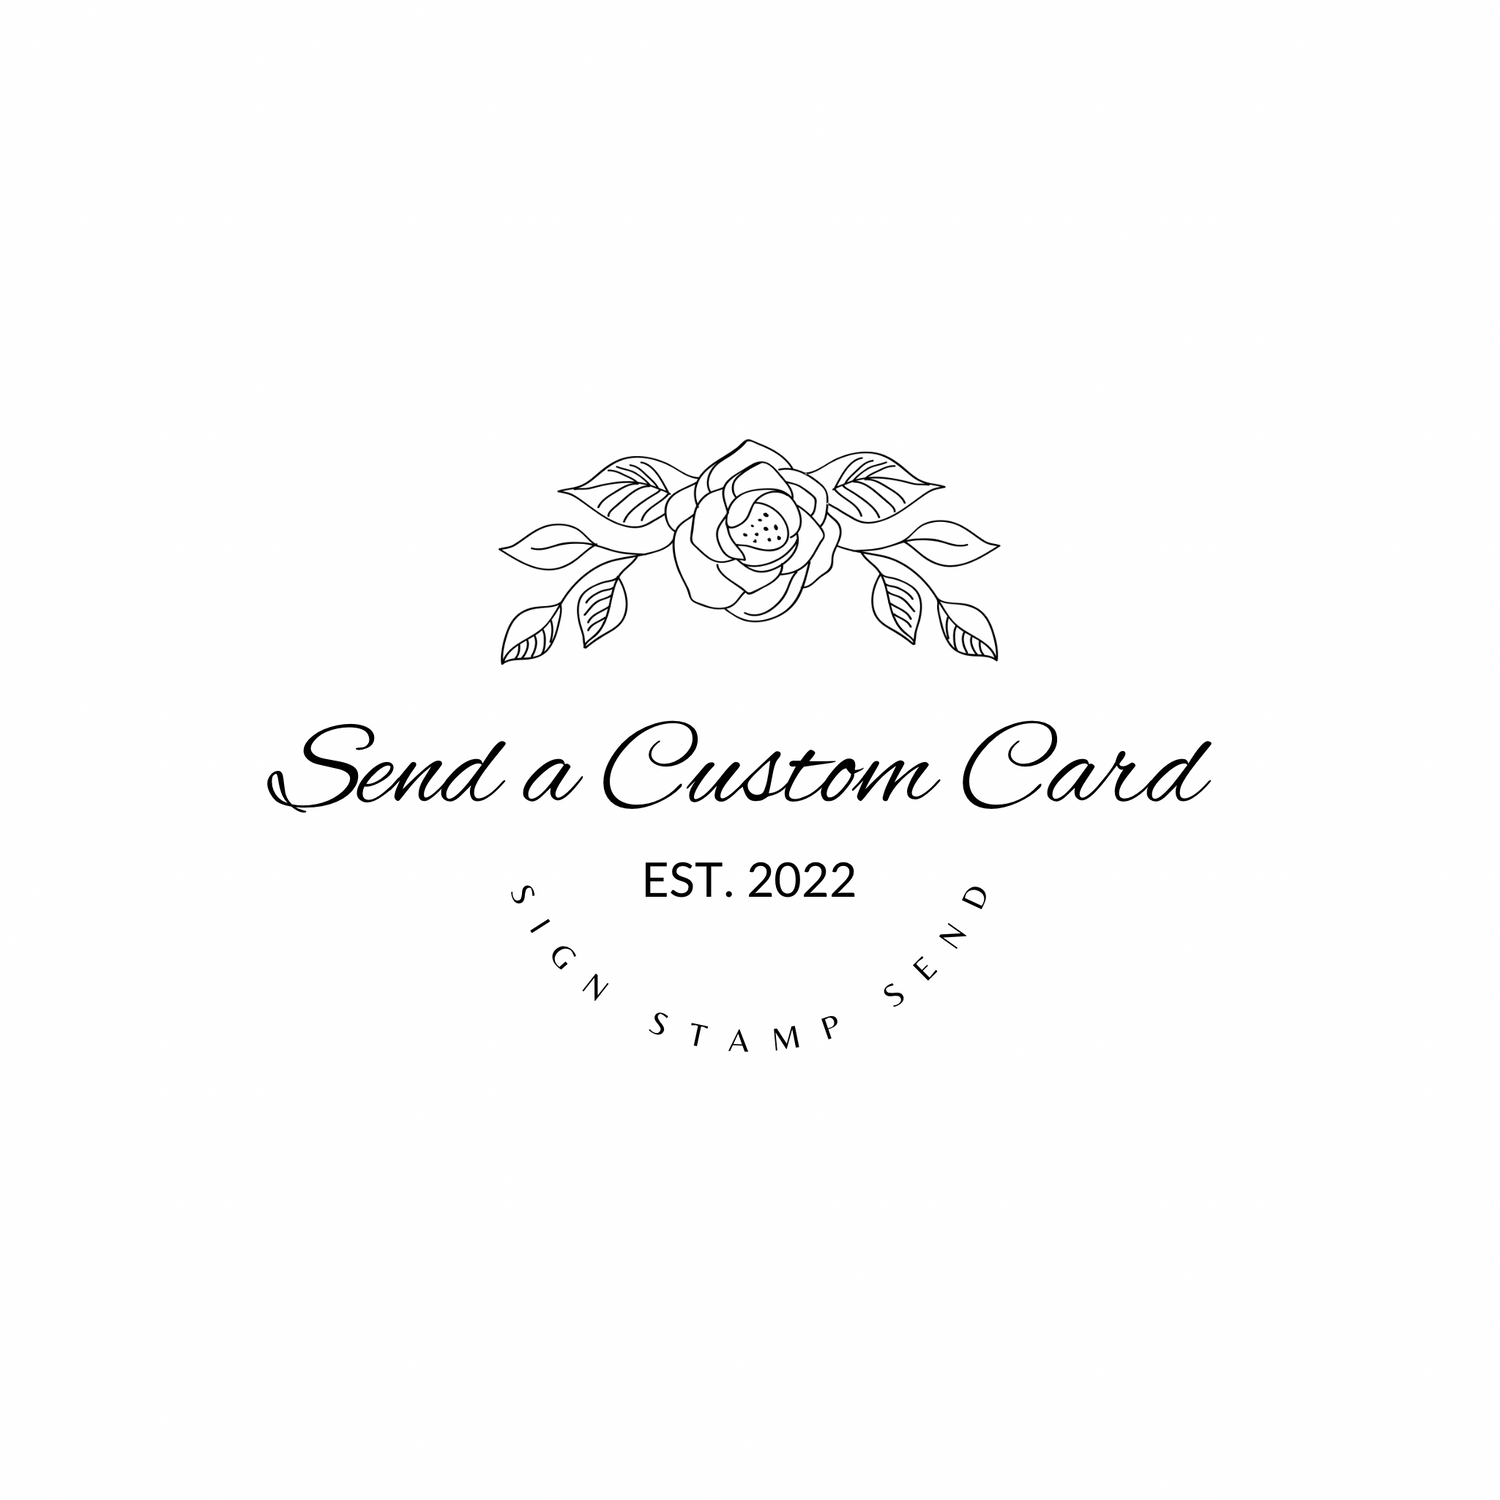 Send a Custom Card main page logo.